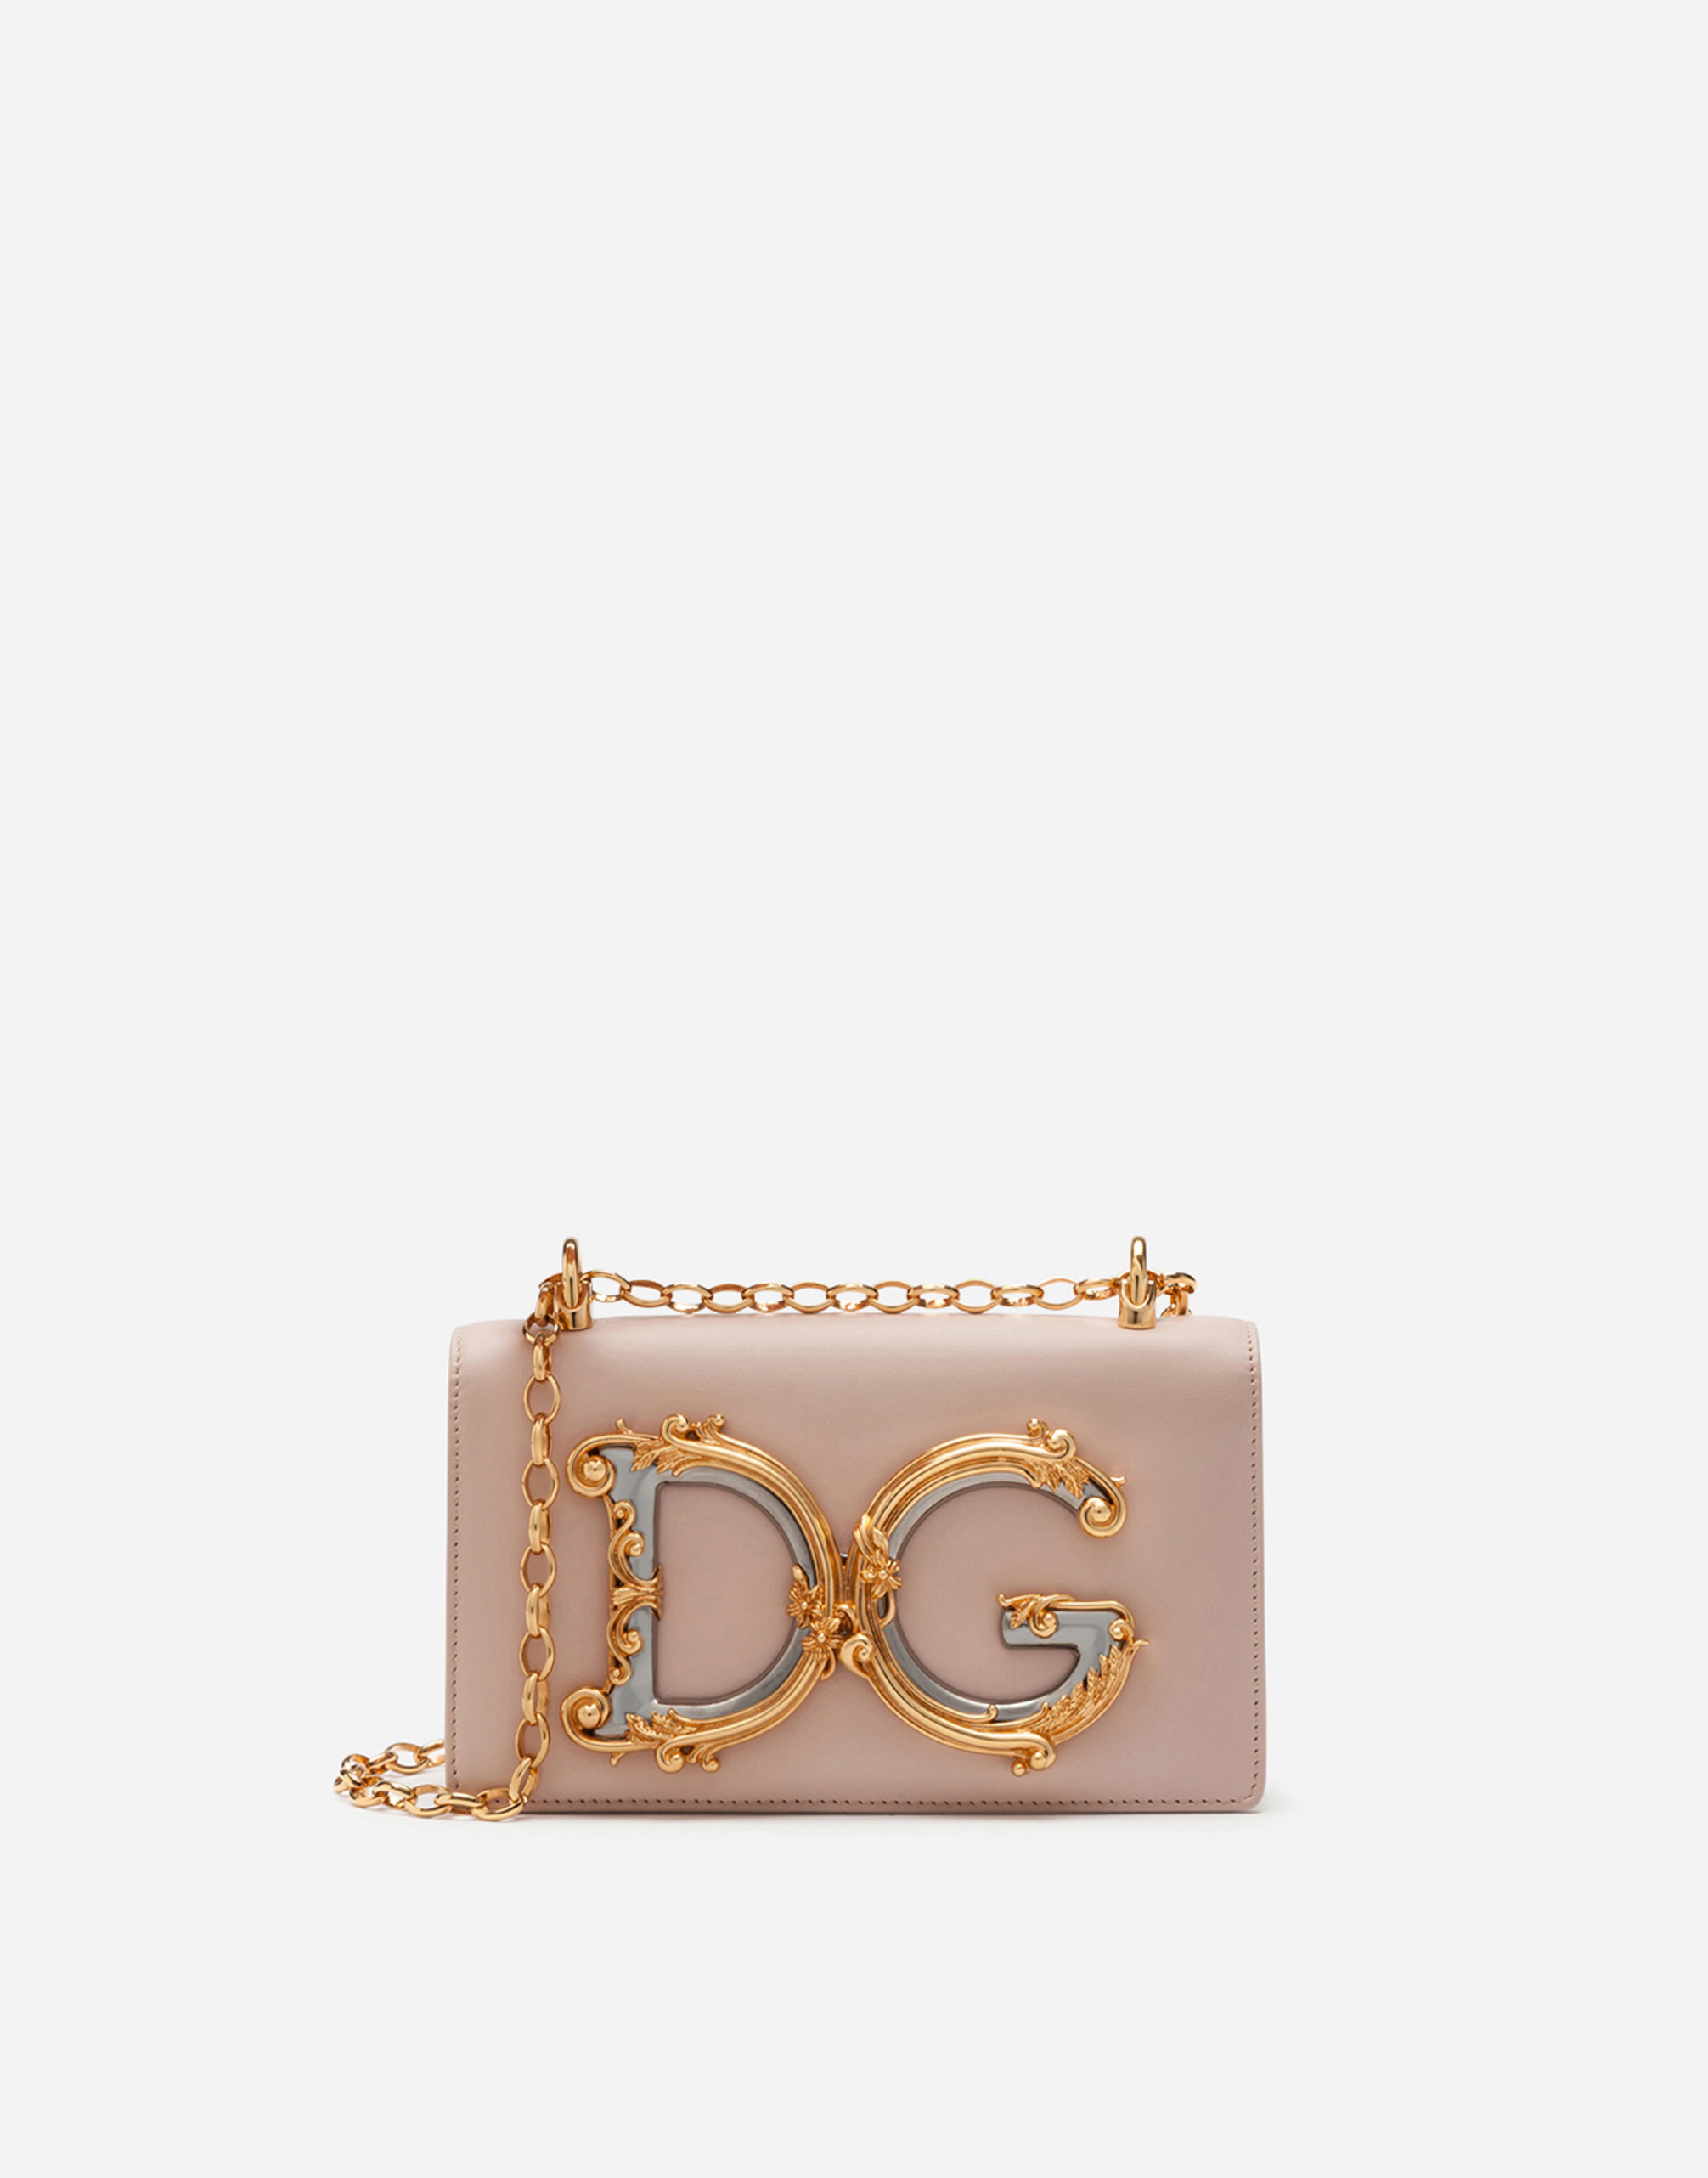 Calfskin DG girls phone bag in Pale Pink